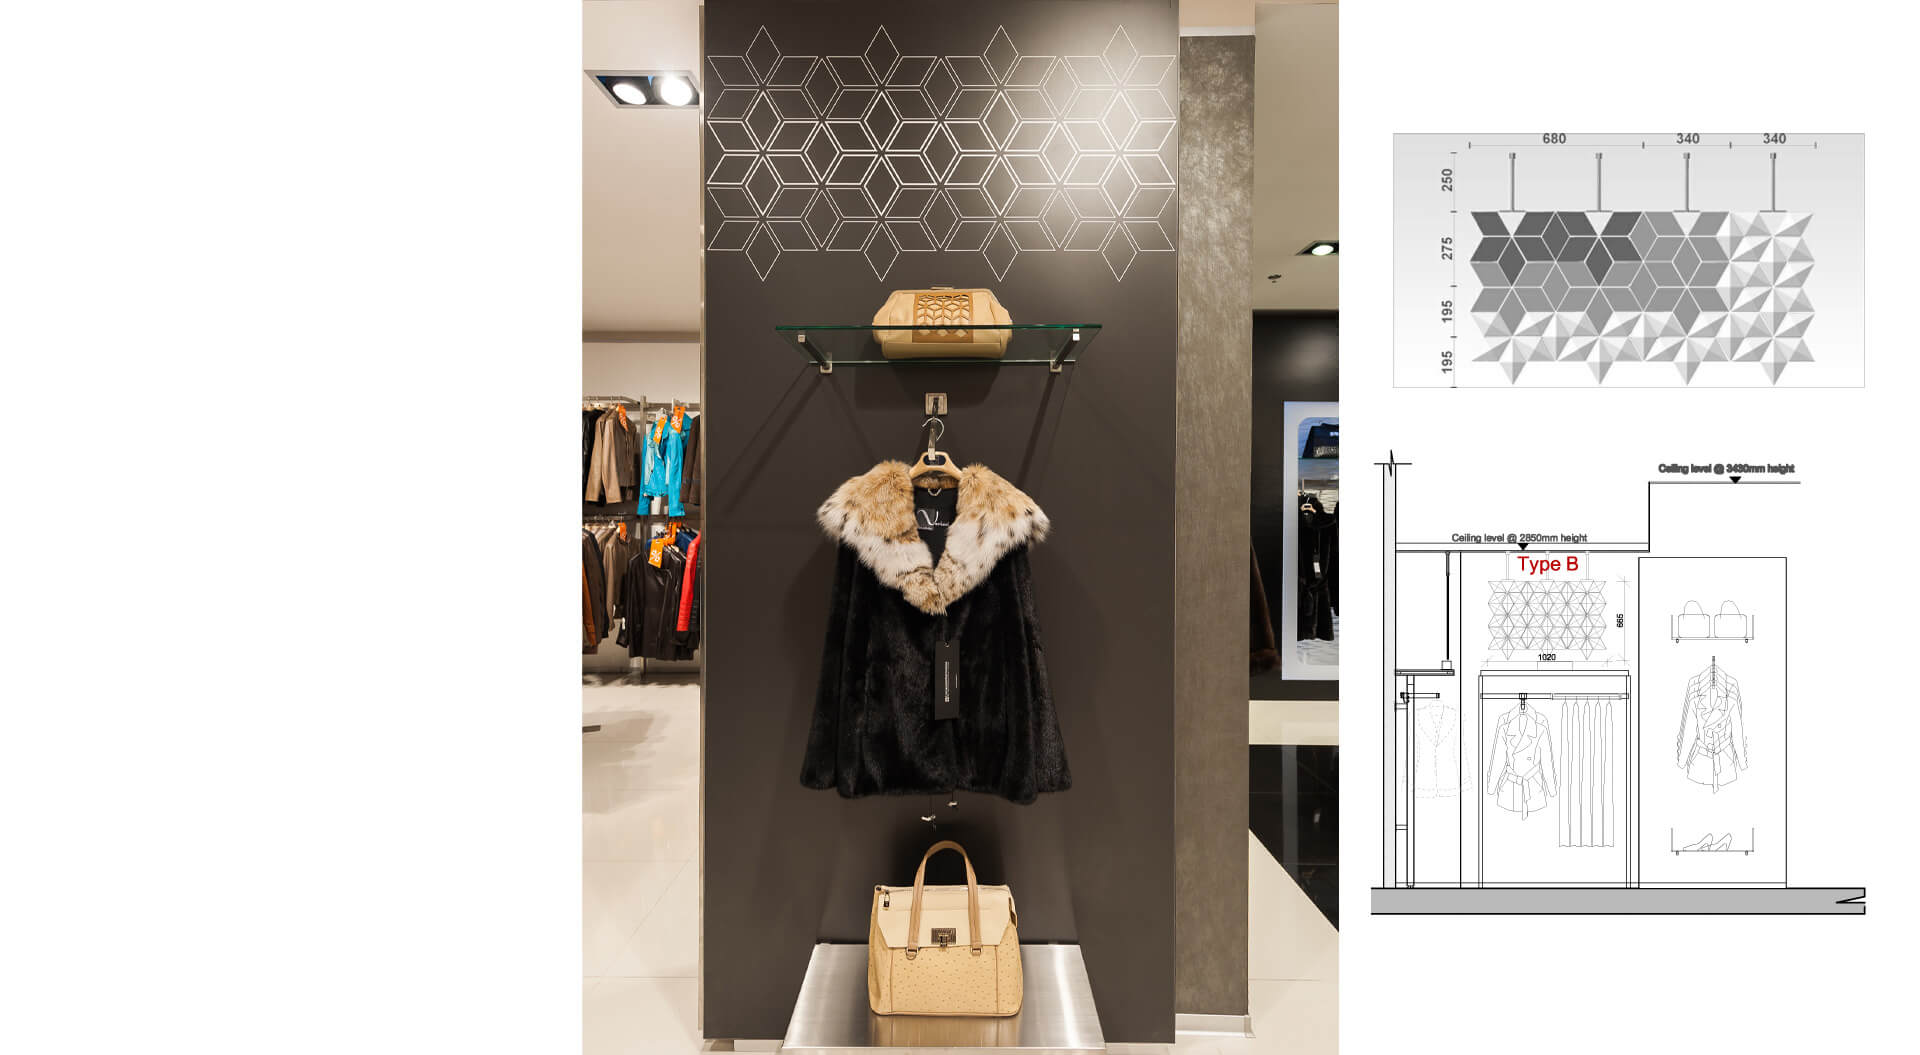 Snow Queen, Снежная королева,  Russia fashion store retail interior design, merchandising and rebrand graphics for furs department